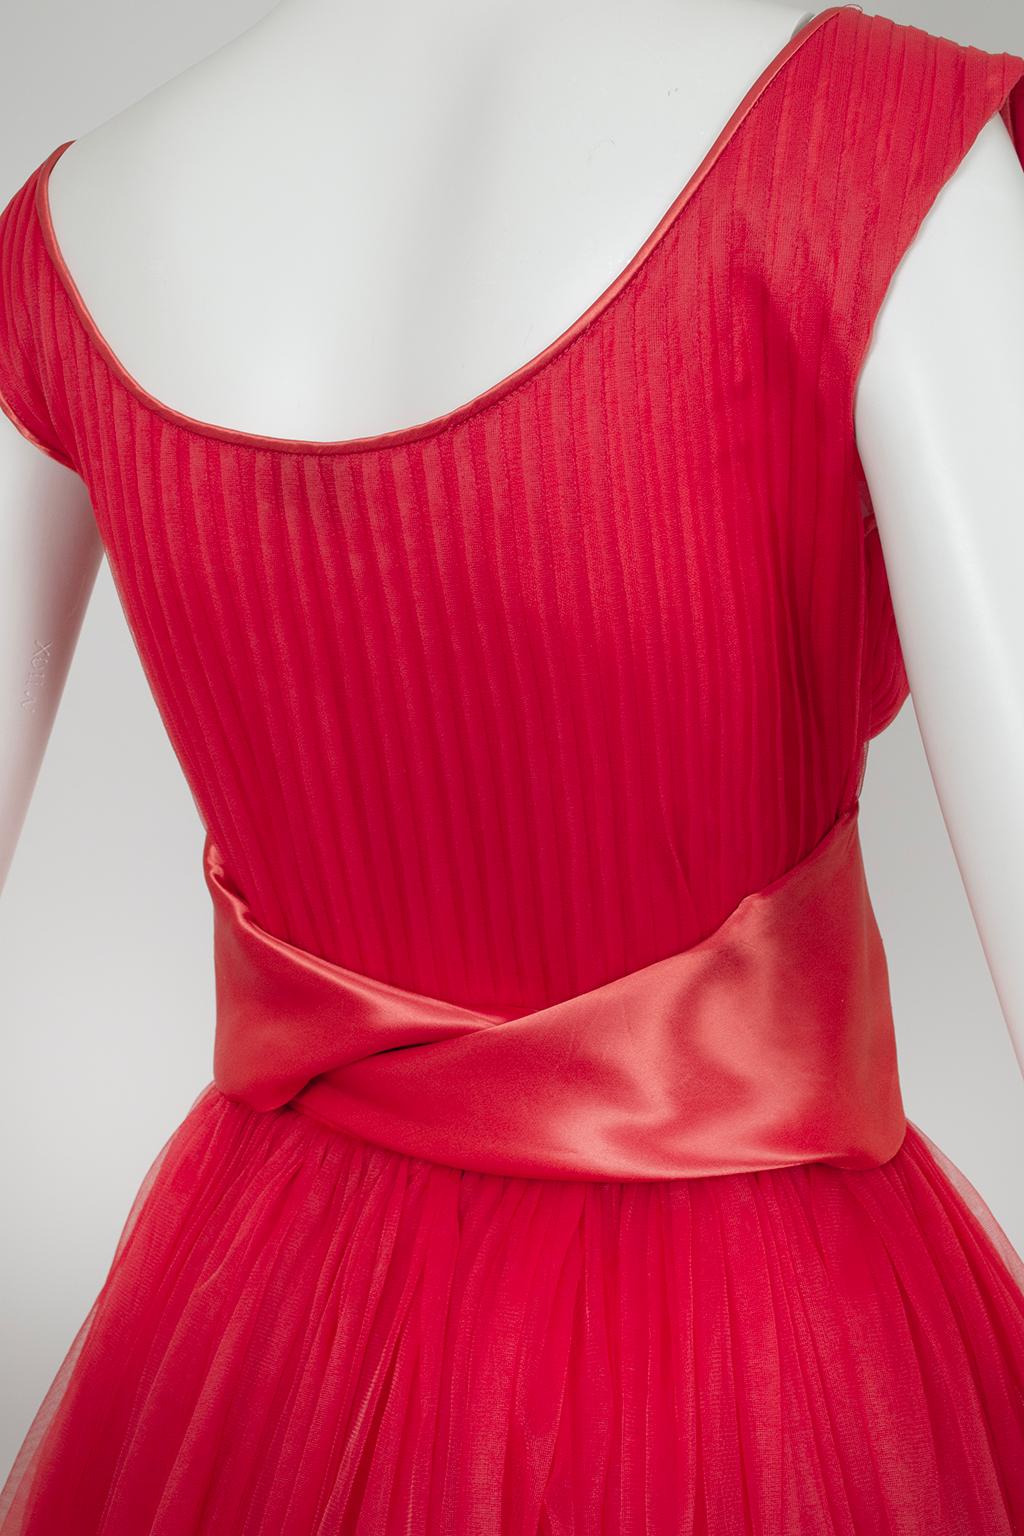 Emma Domb Red Bib Front Ballerina Party Dress with Satin Cummerbund – S, 1950s For Sale 5